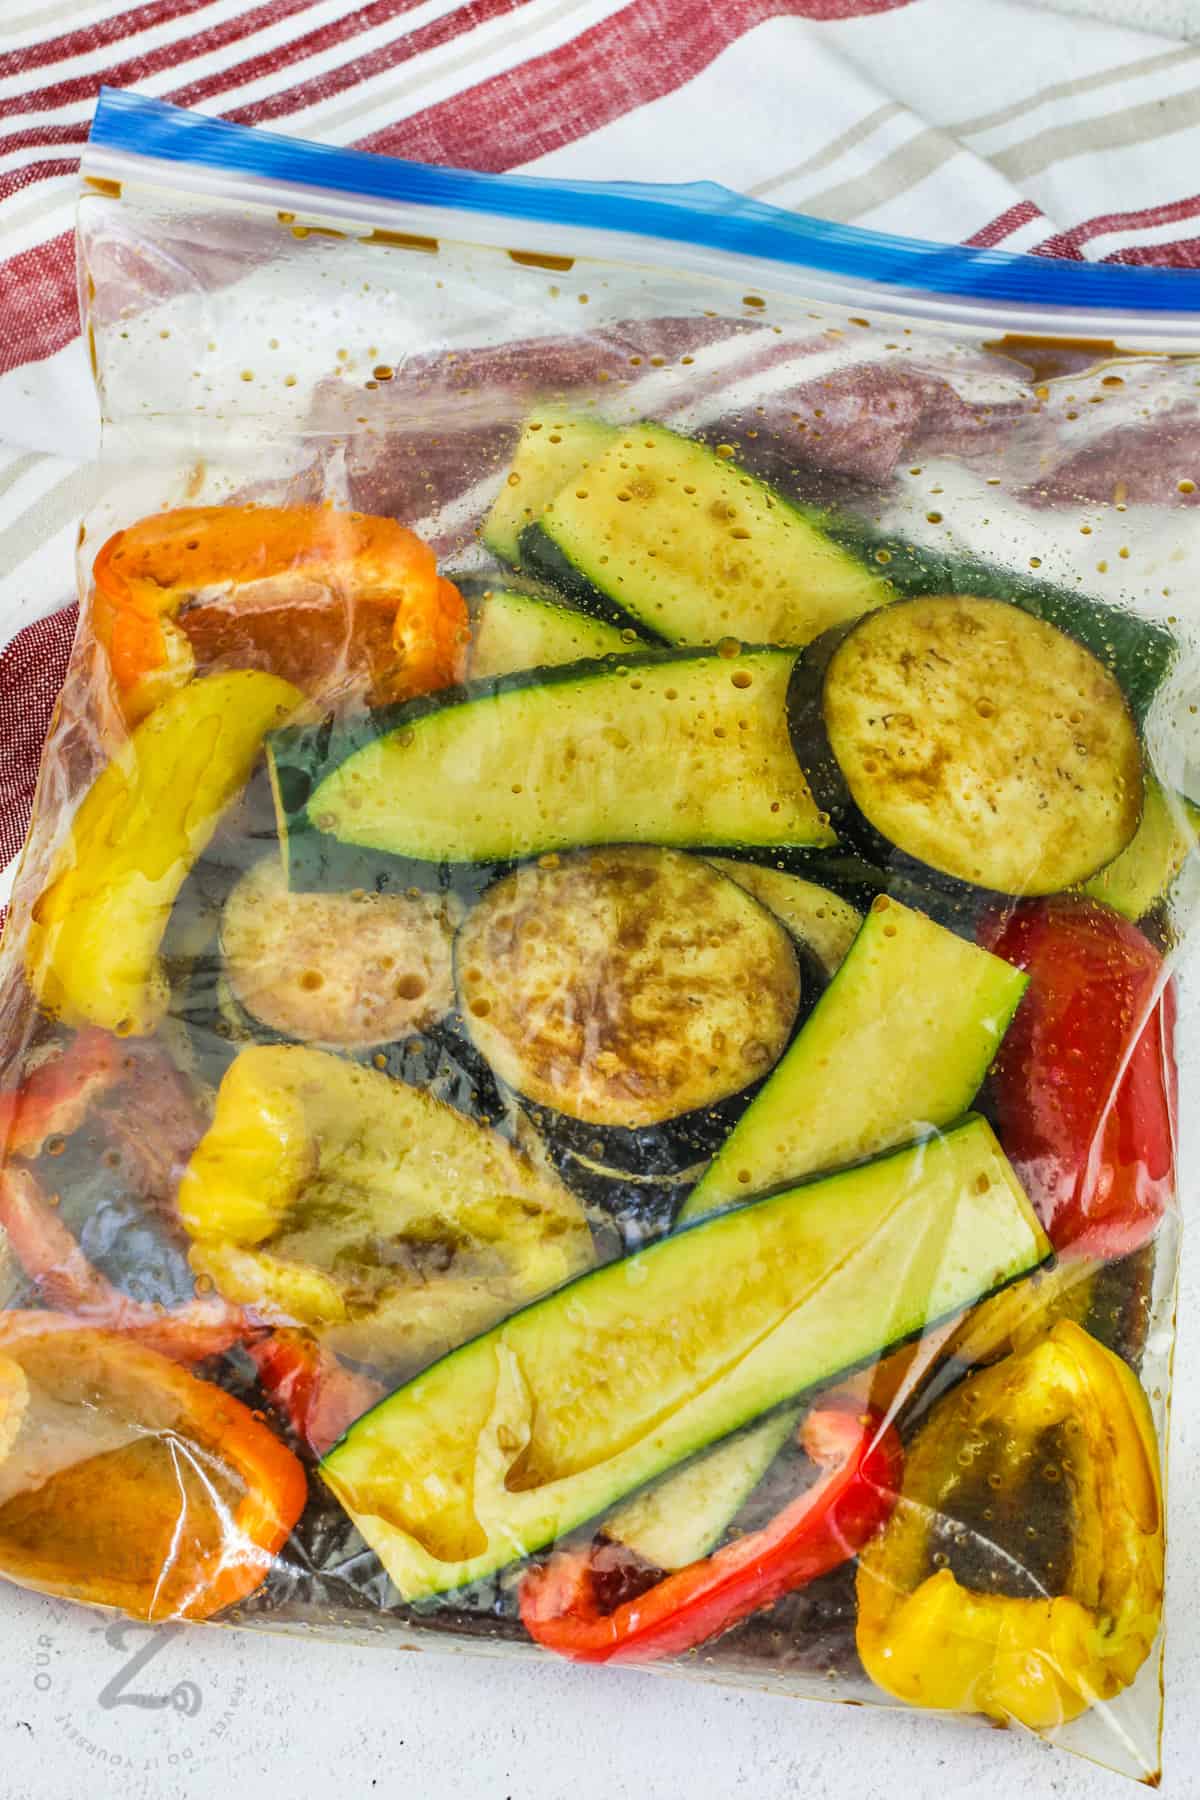 vegetables marinating in a bag to make Grilled Vegetables